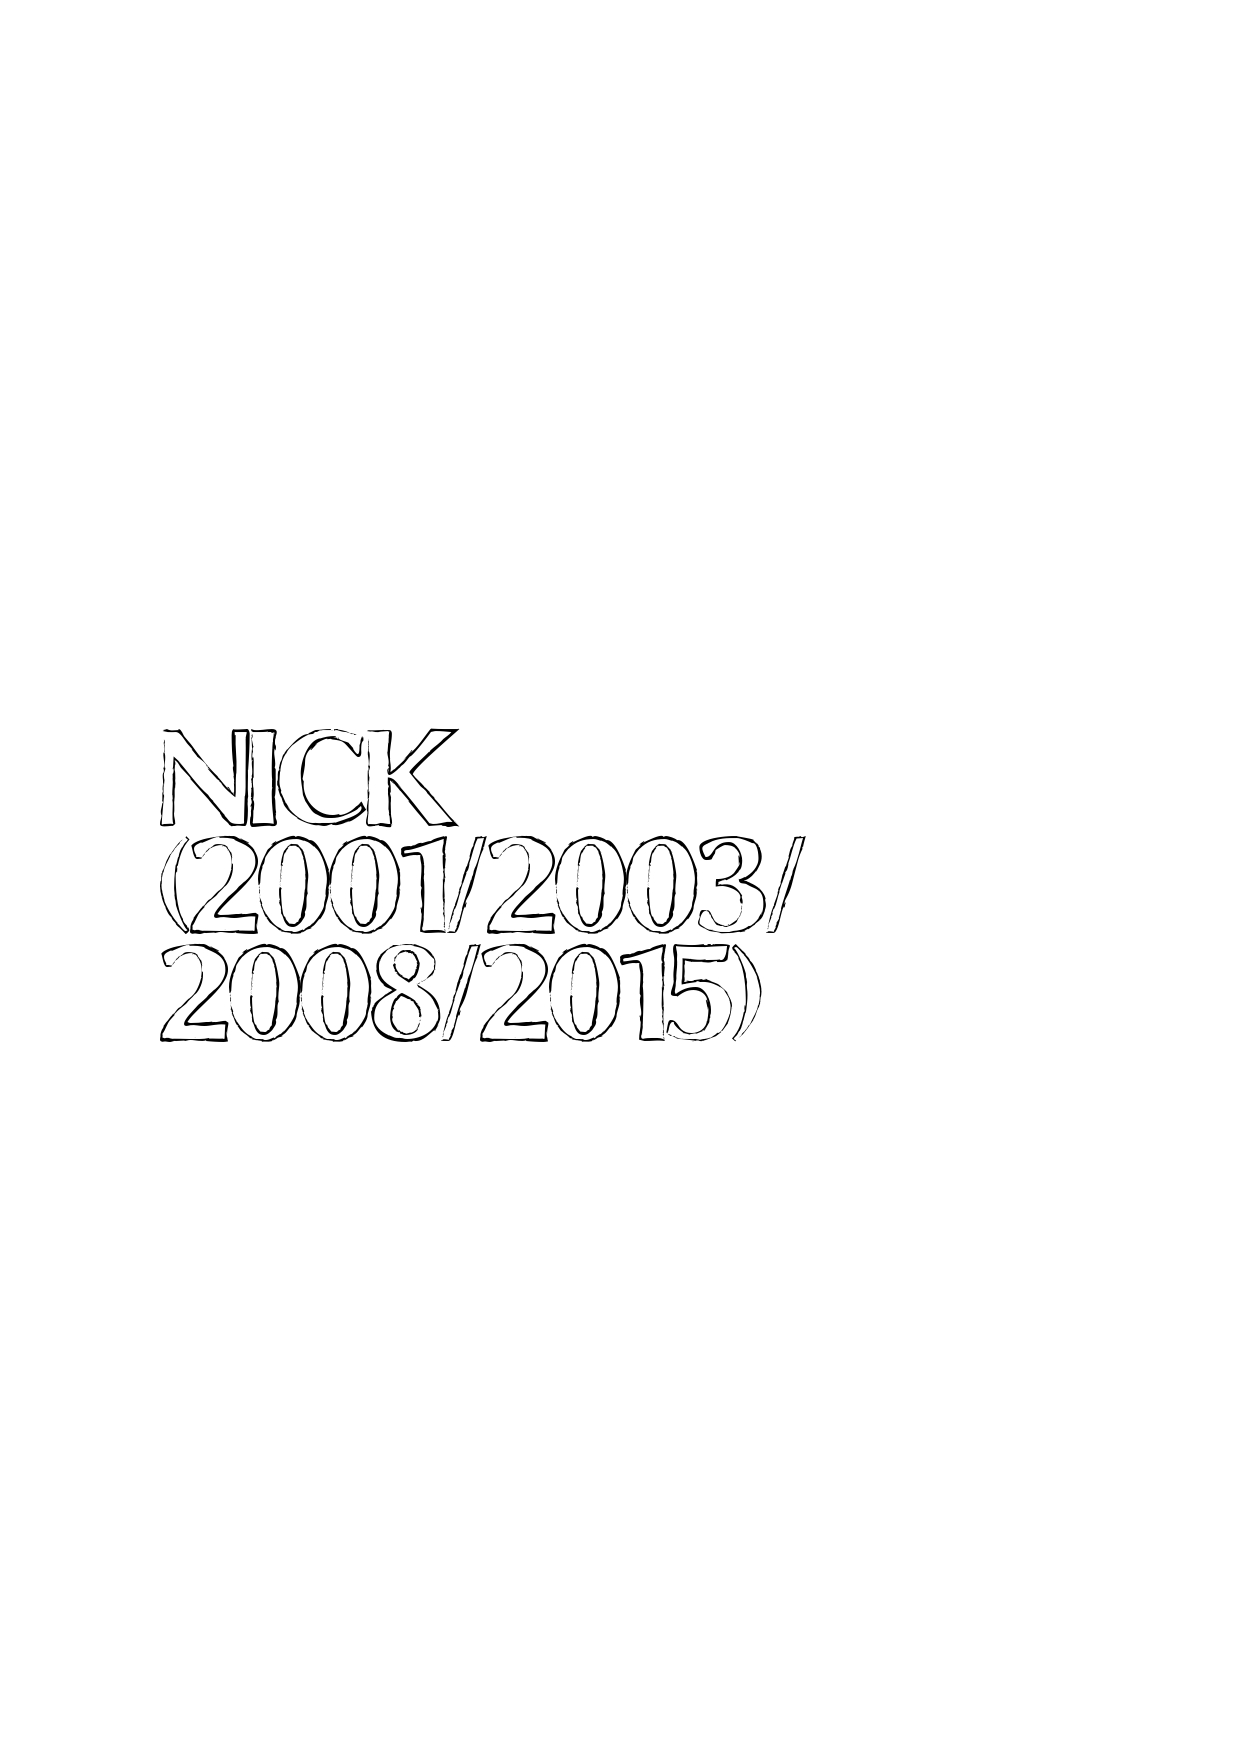 Nick(2001/2003/2008/2015)